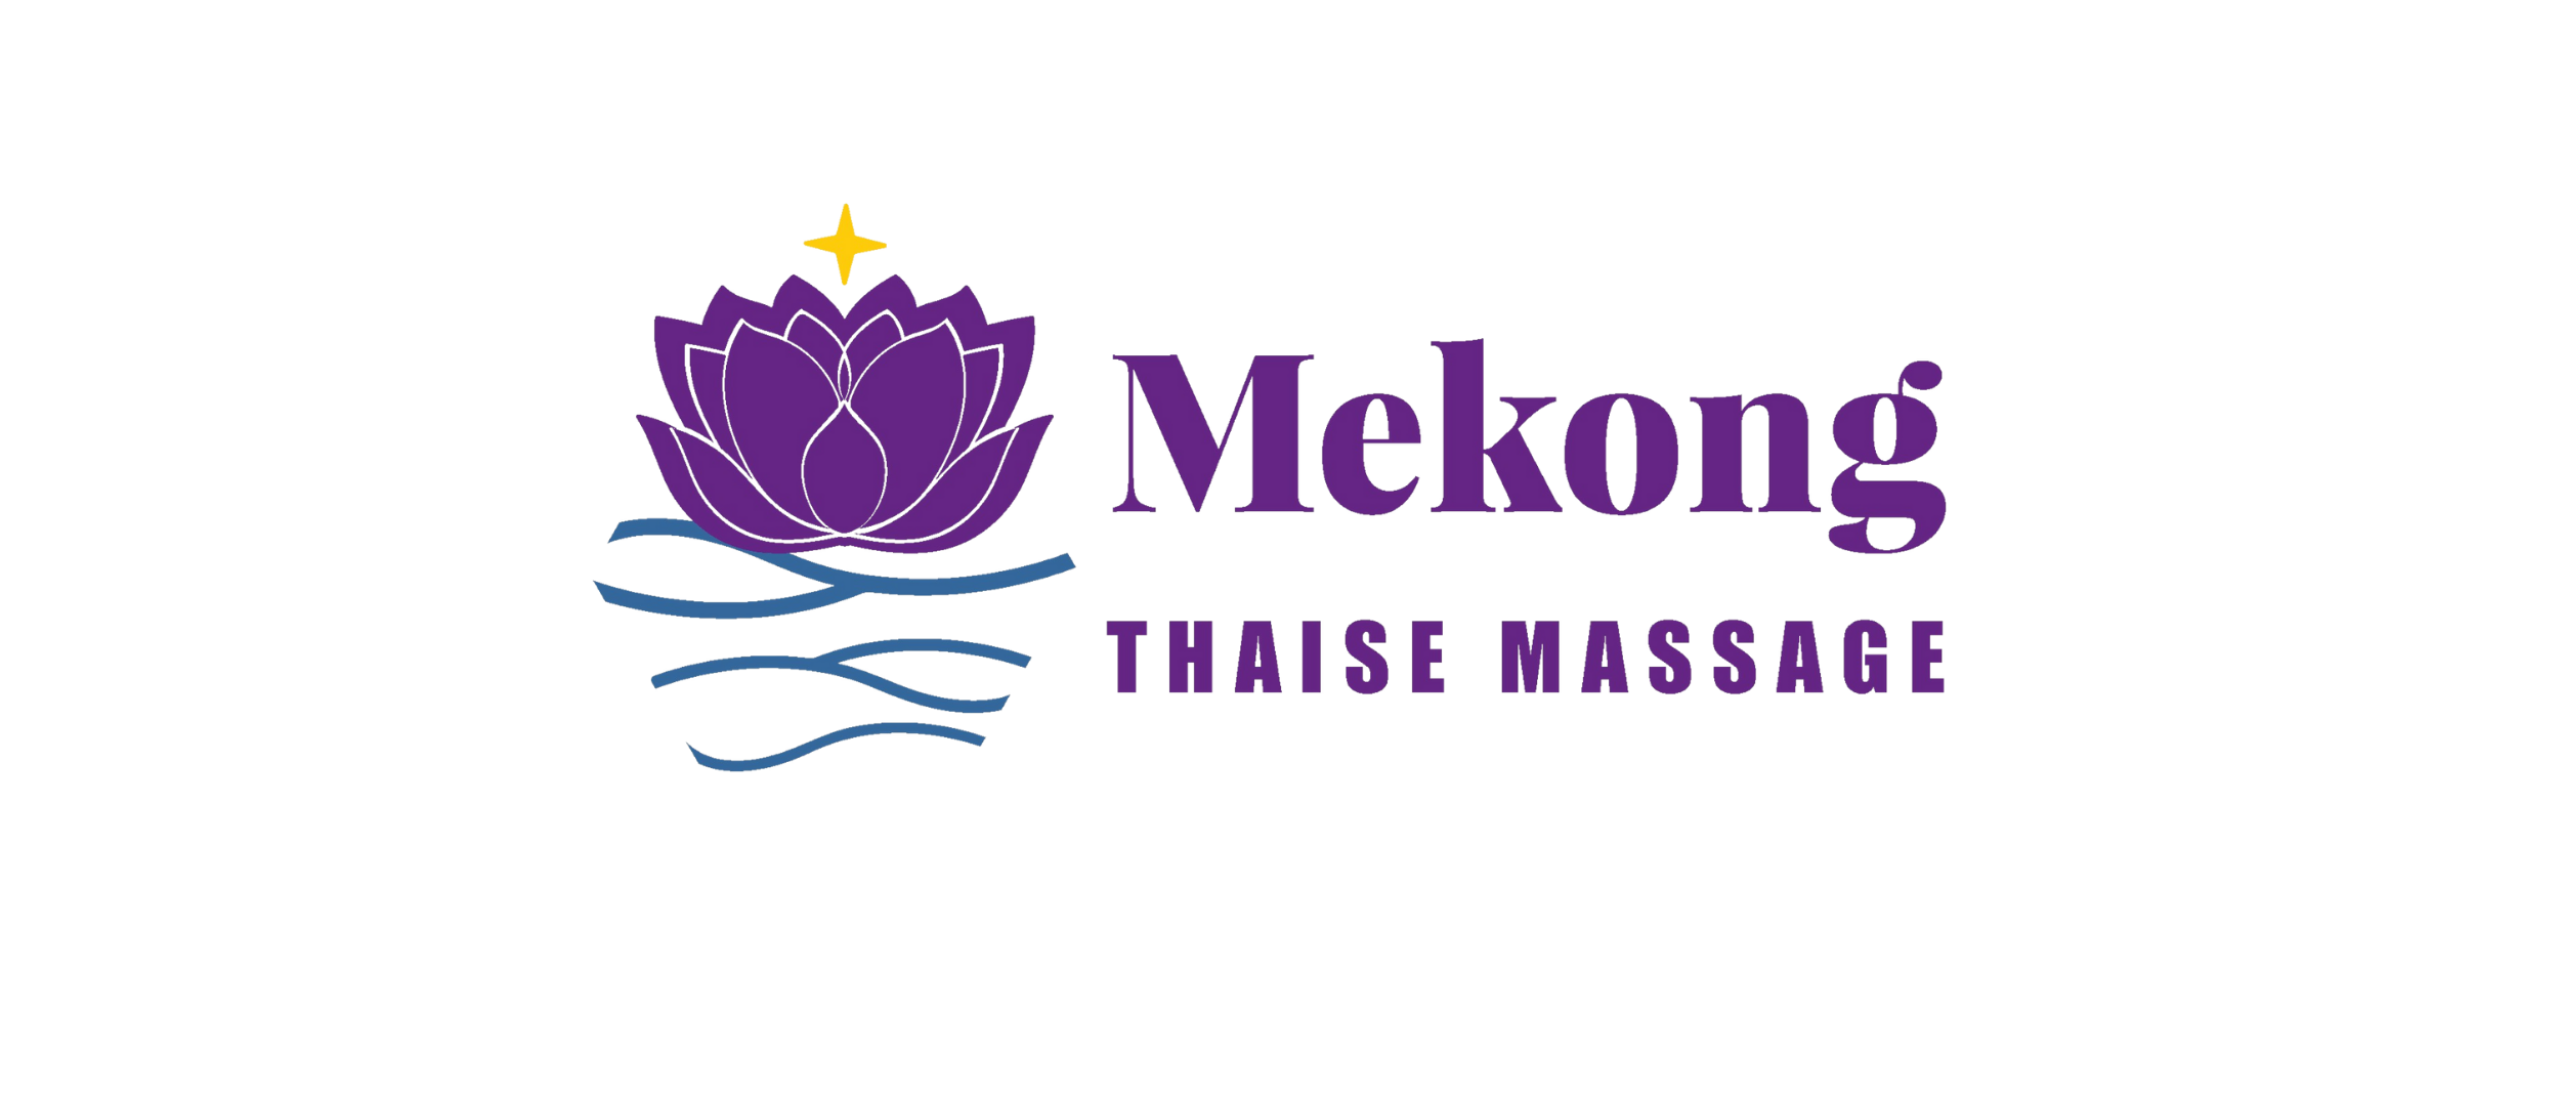 Mekong Thaise Massage: Uw massagesalon om stress en fysieke klachten te verlichten